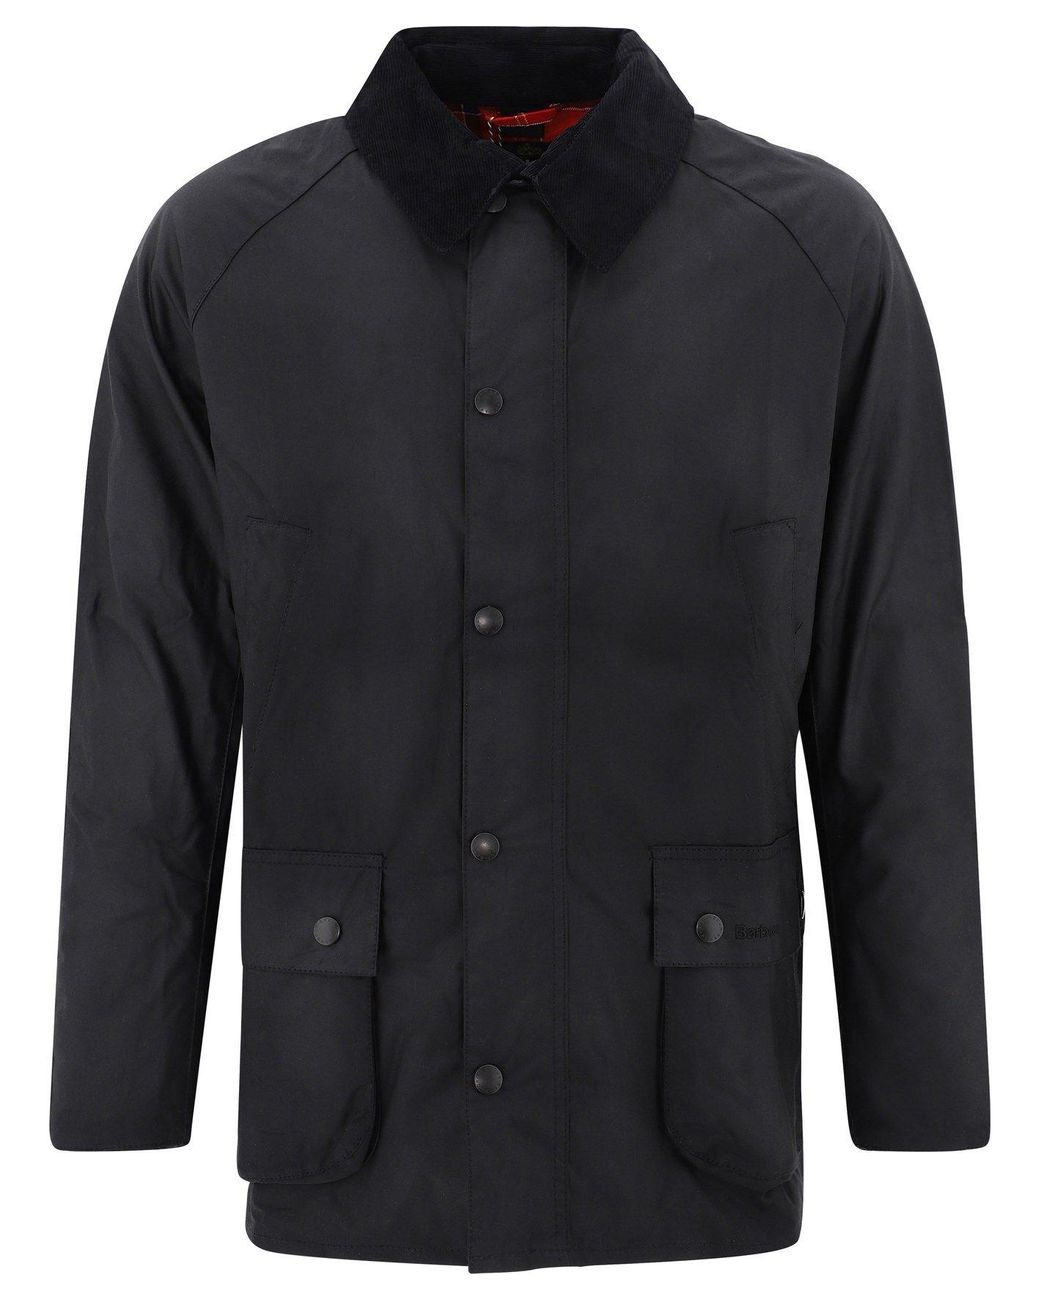 Barbour Cotton Jacket in Black for Men - Lyst